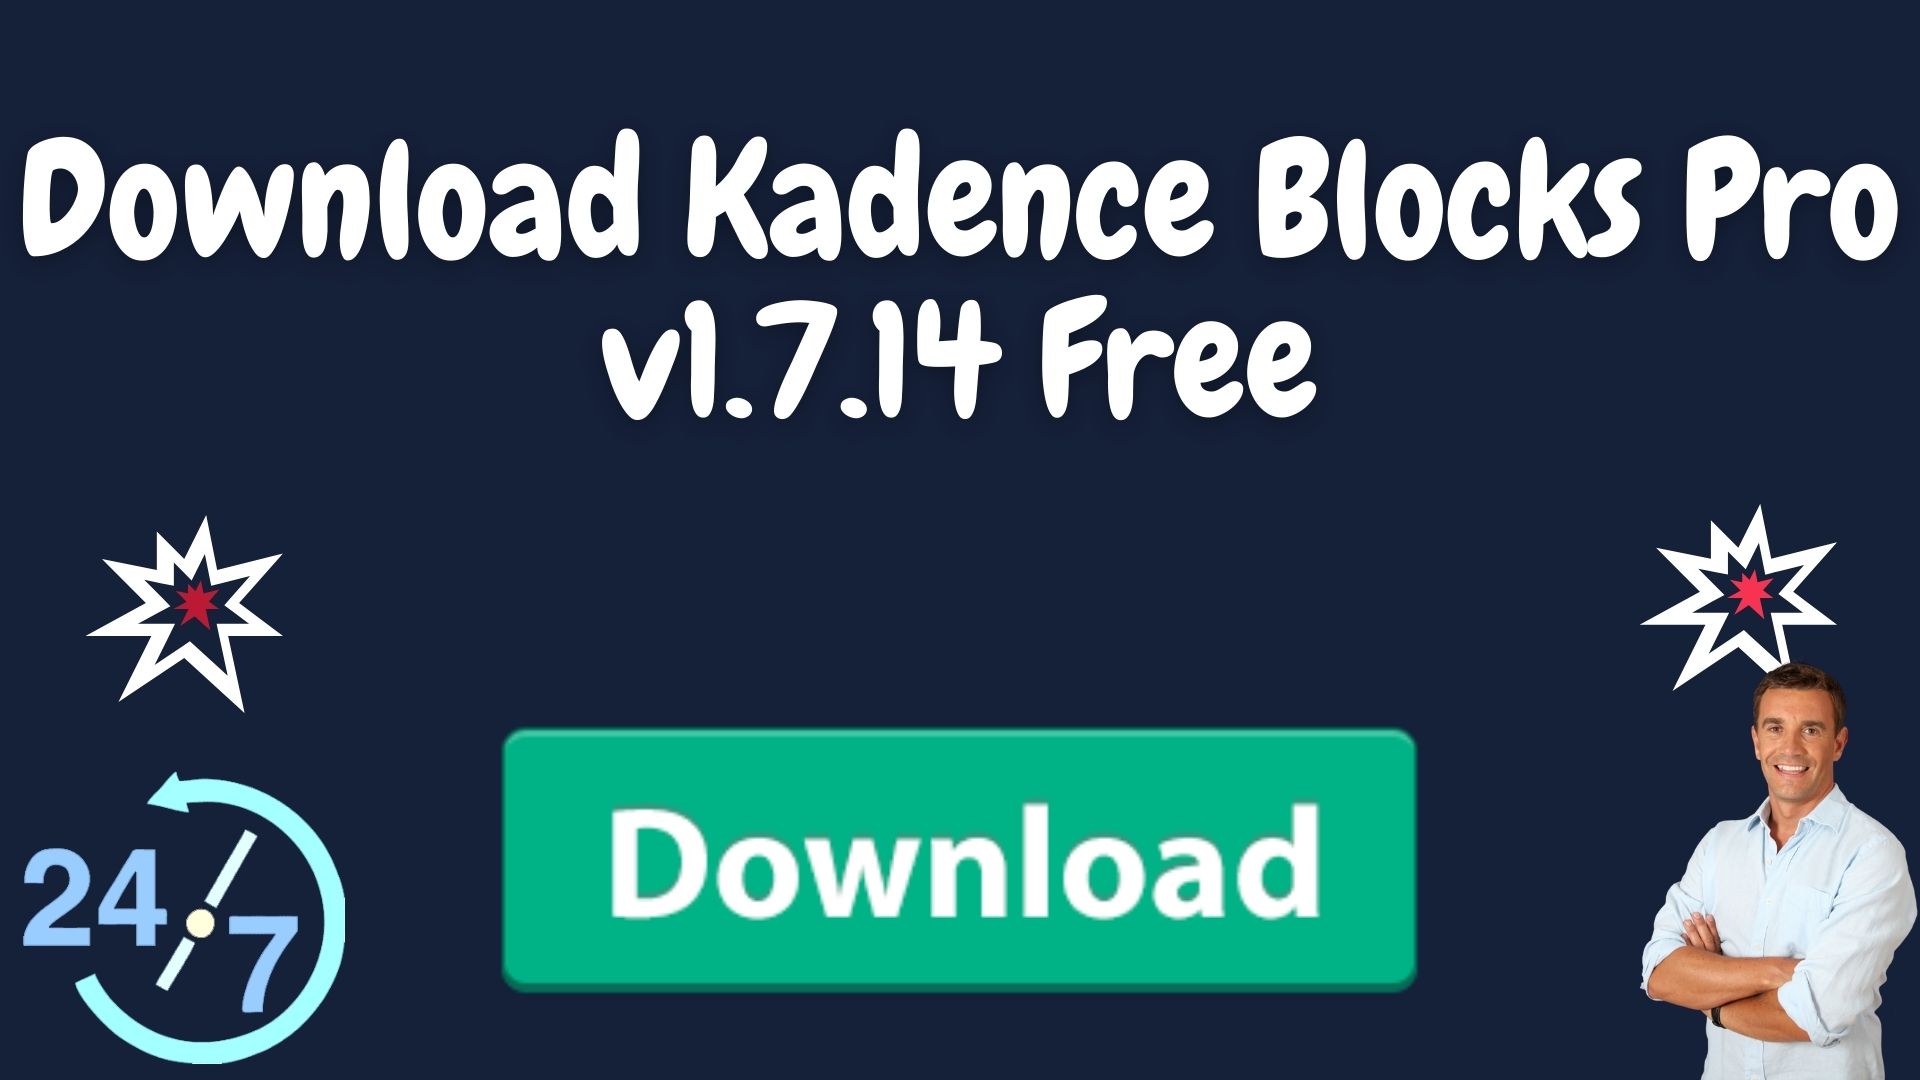 Download Kadence Blocks Pro V1.7.14 Free